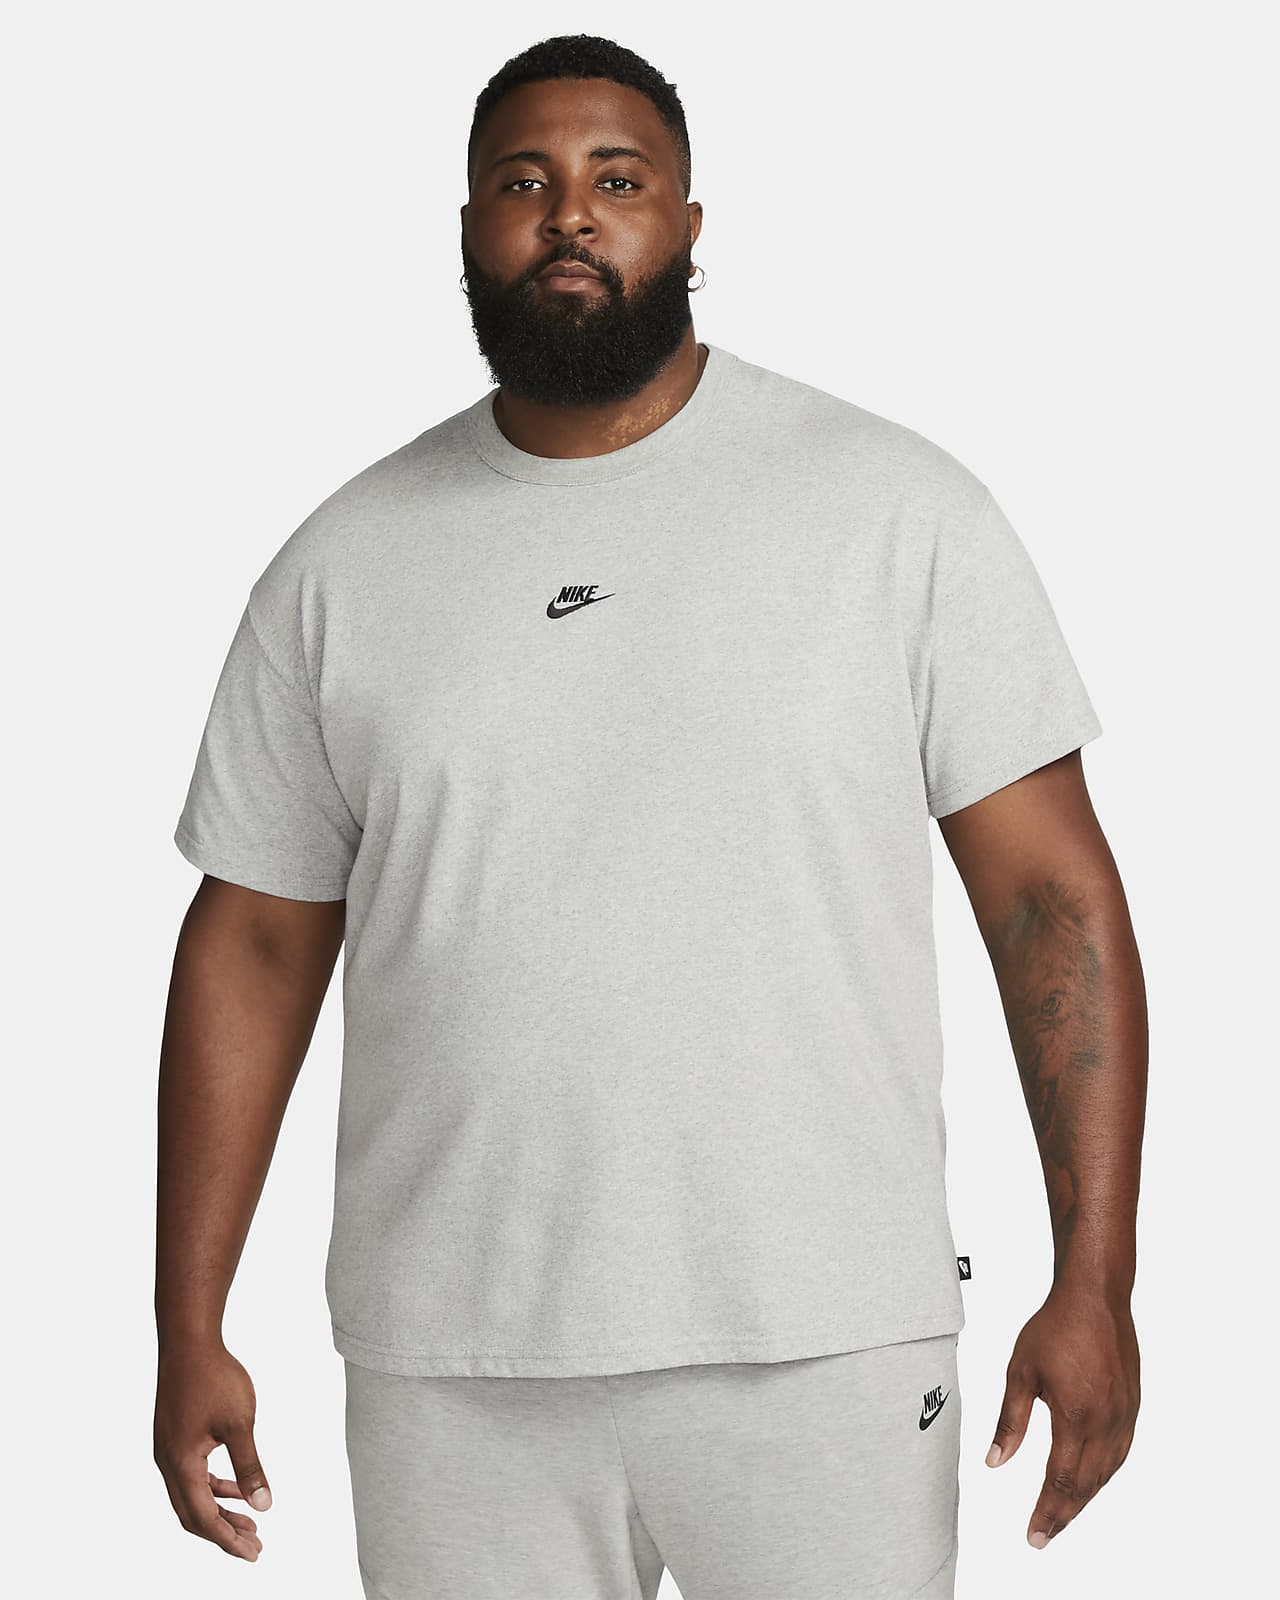 Essential Deportes - Ropa Deportiva Hombre - Camisetas para Hombre